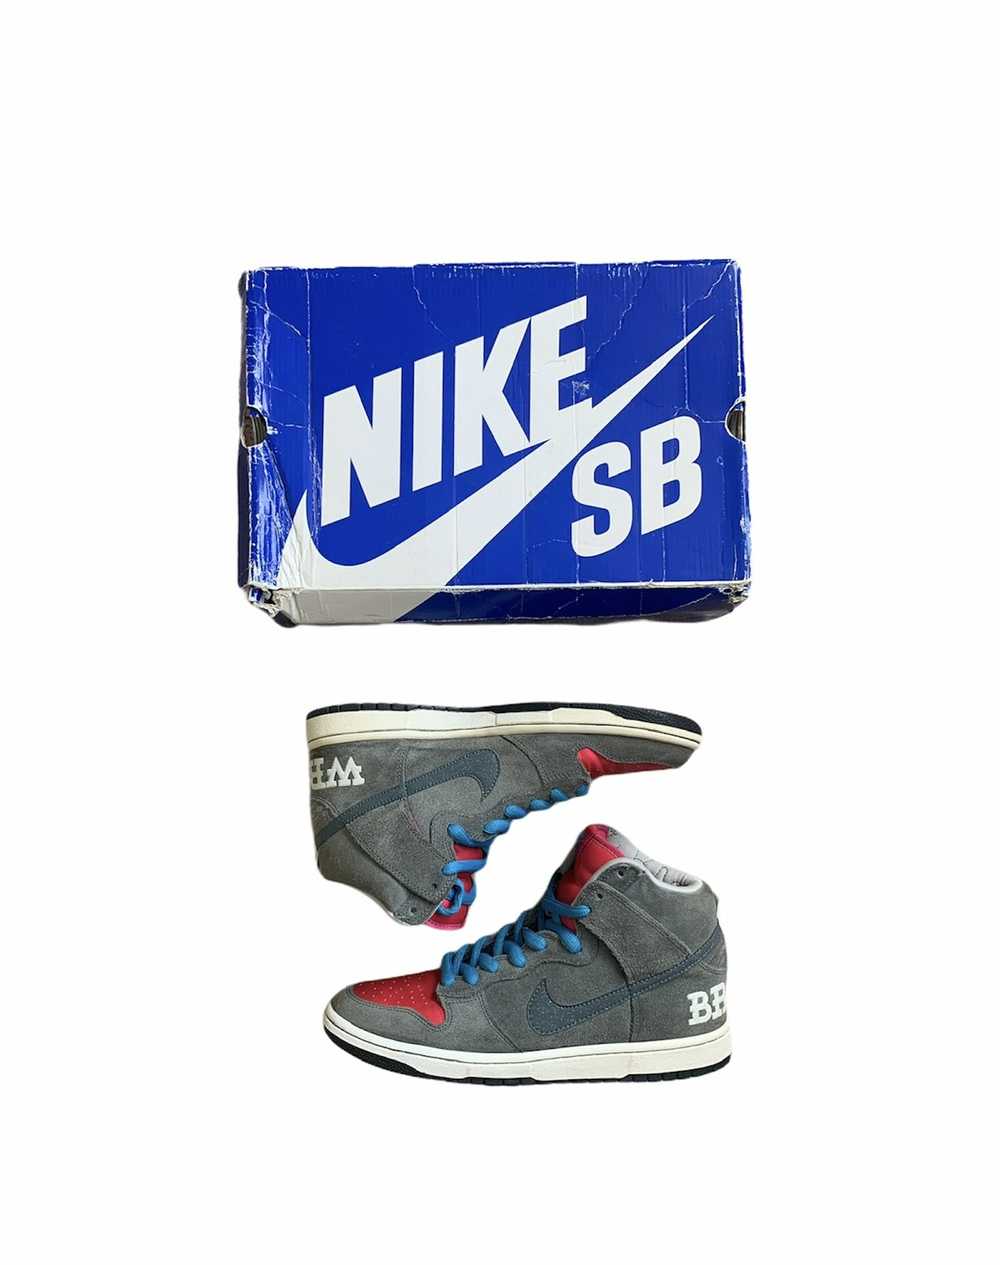 Nike 2009 Nike SB Dunk High Premium “Brain Wreck” - image 1